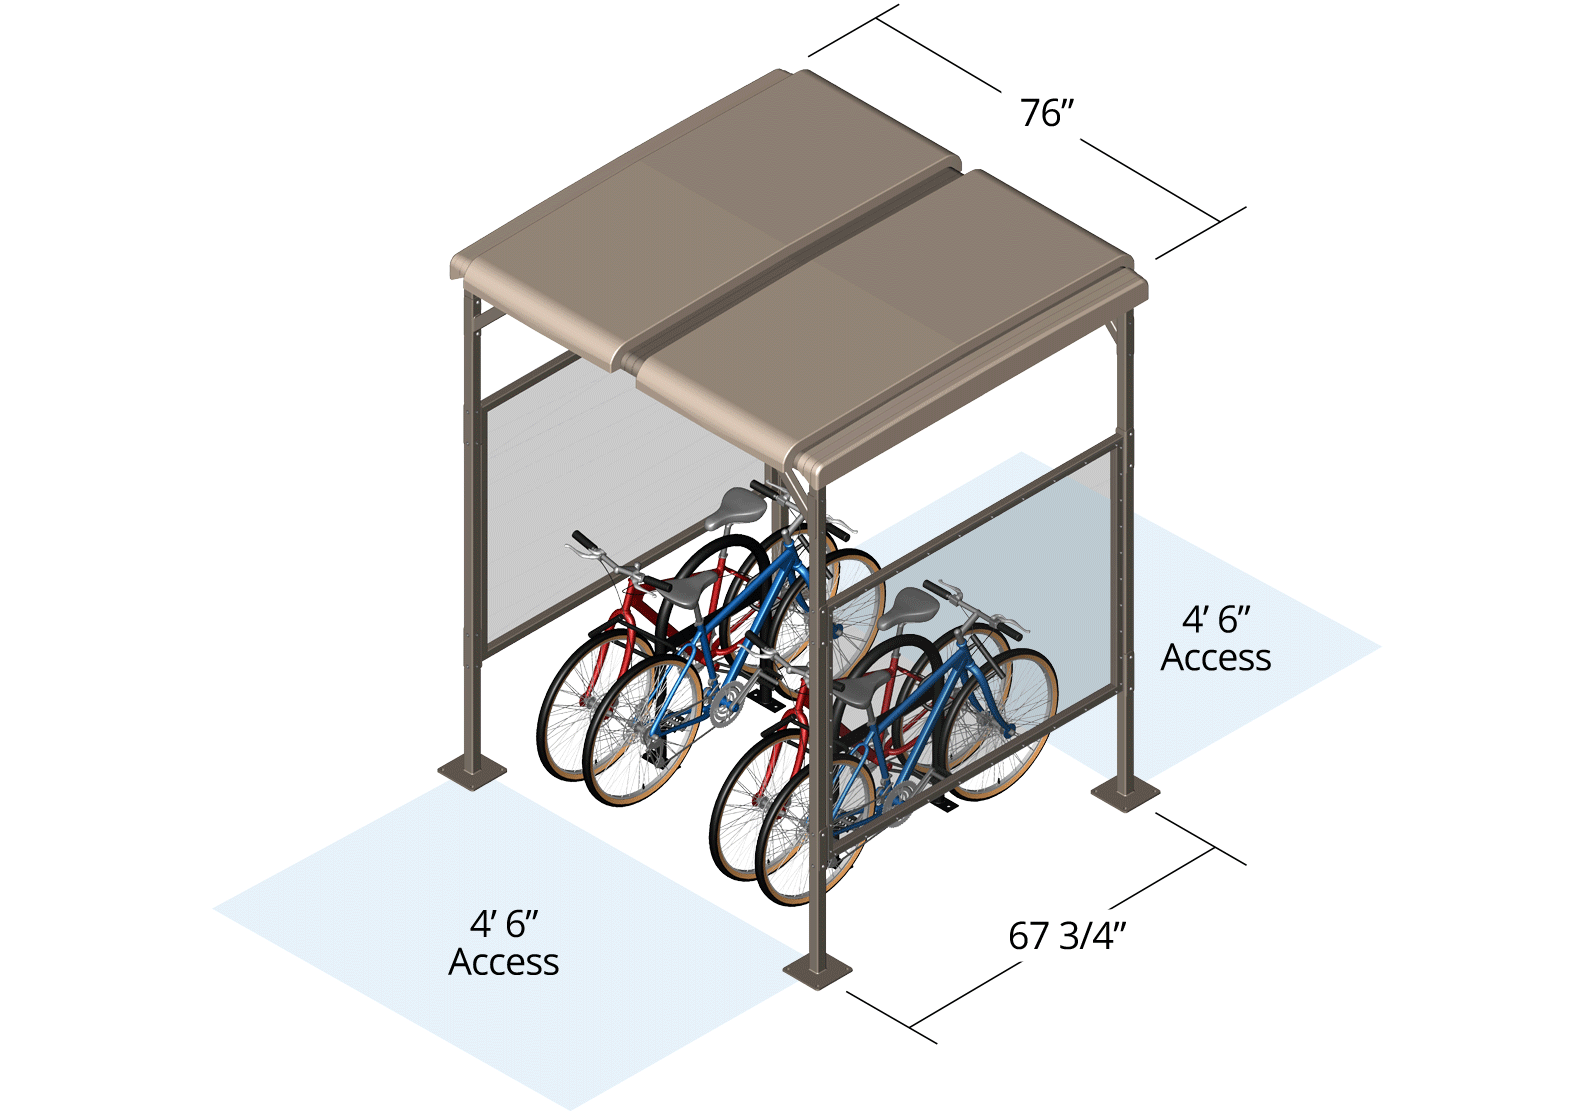 Bike Shelter Dimensions